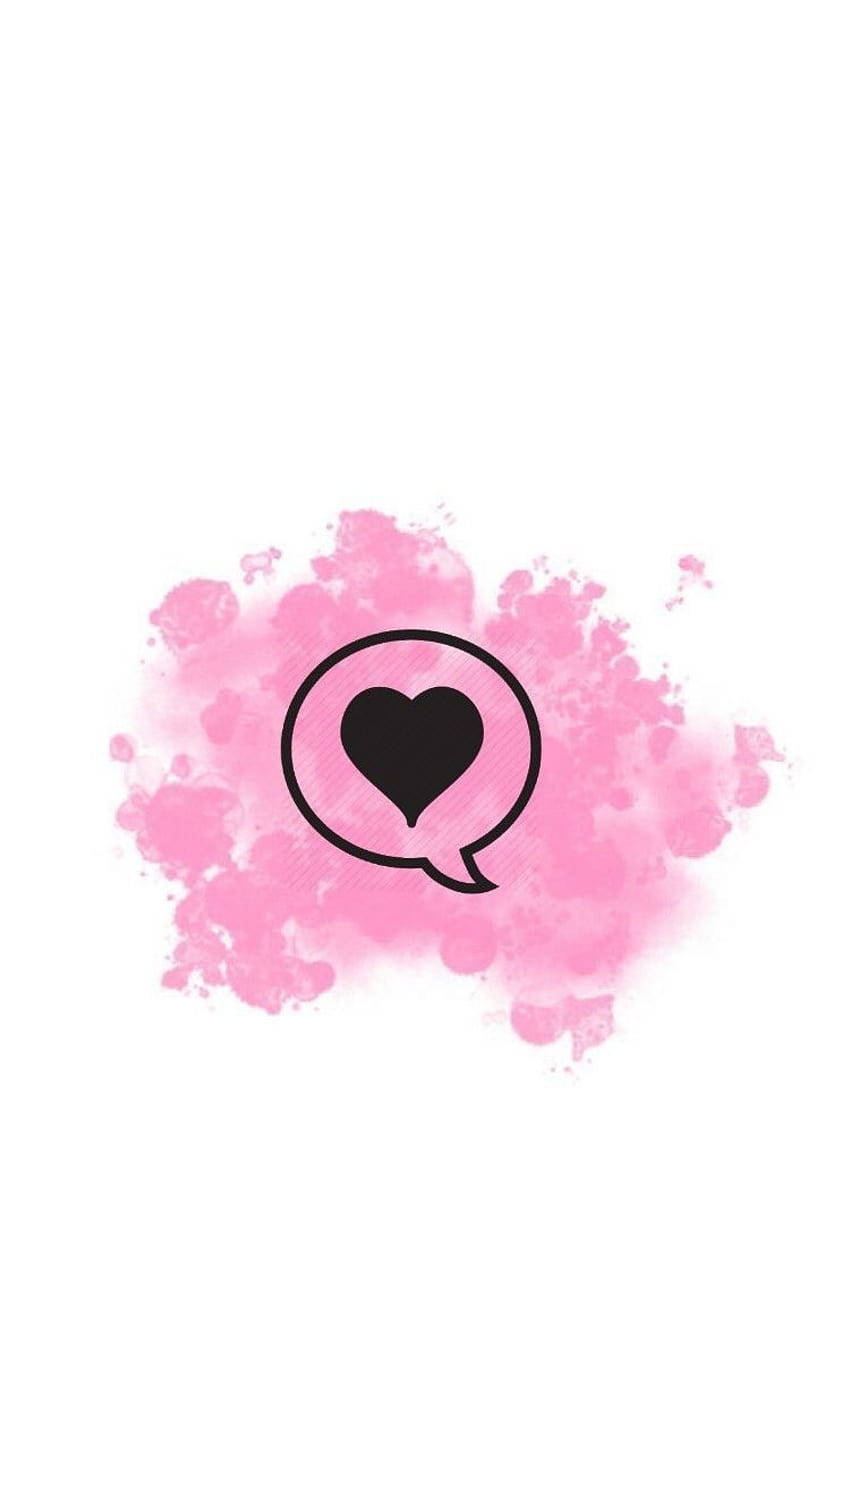 Herzbotschaft Pink Instagram Profil Wallpaper